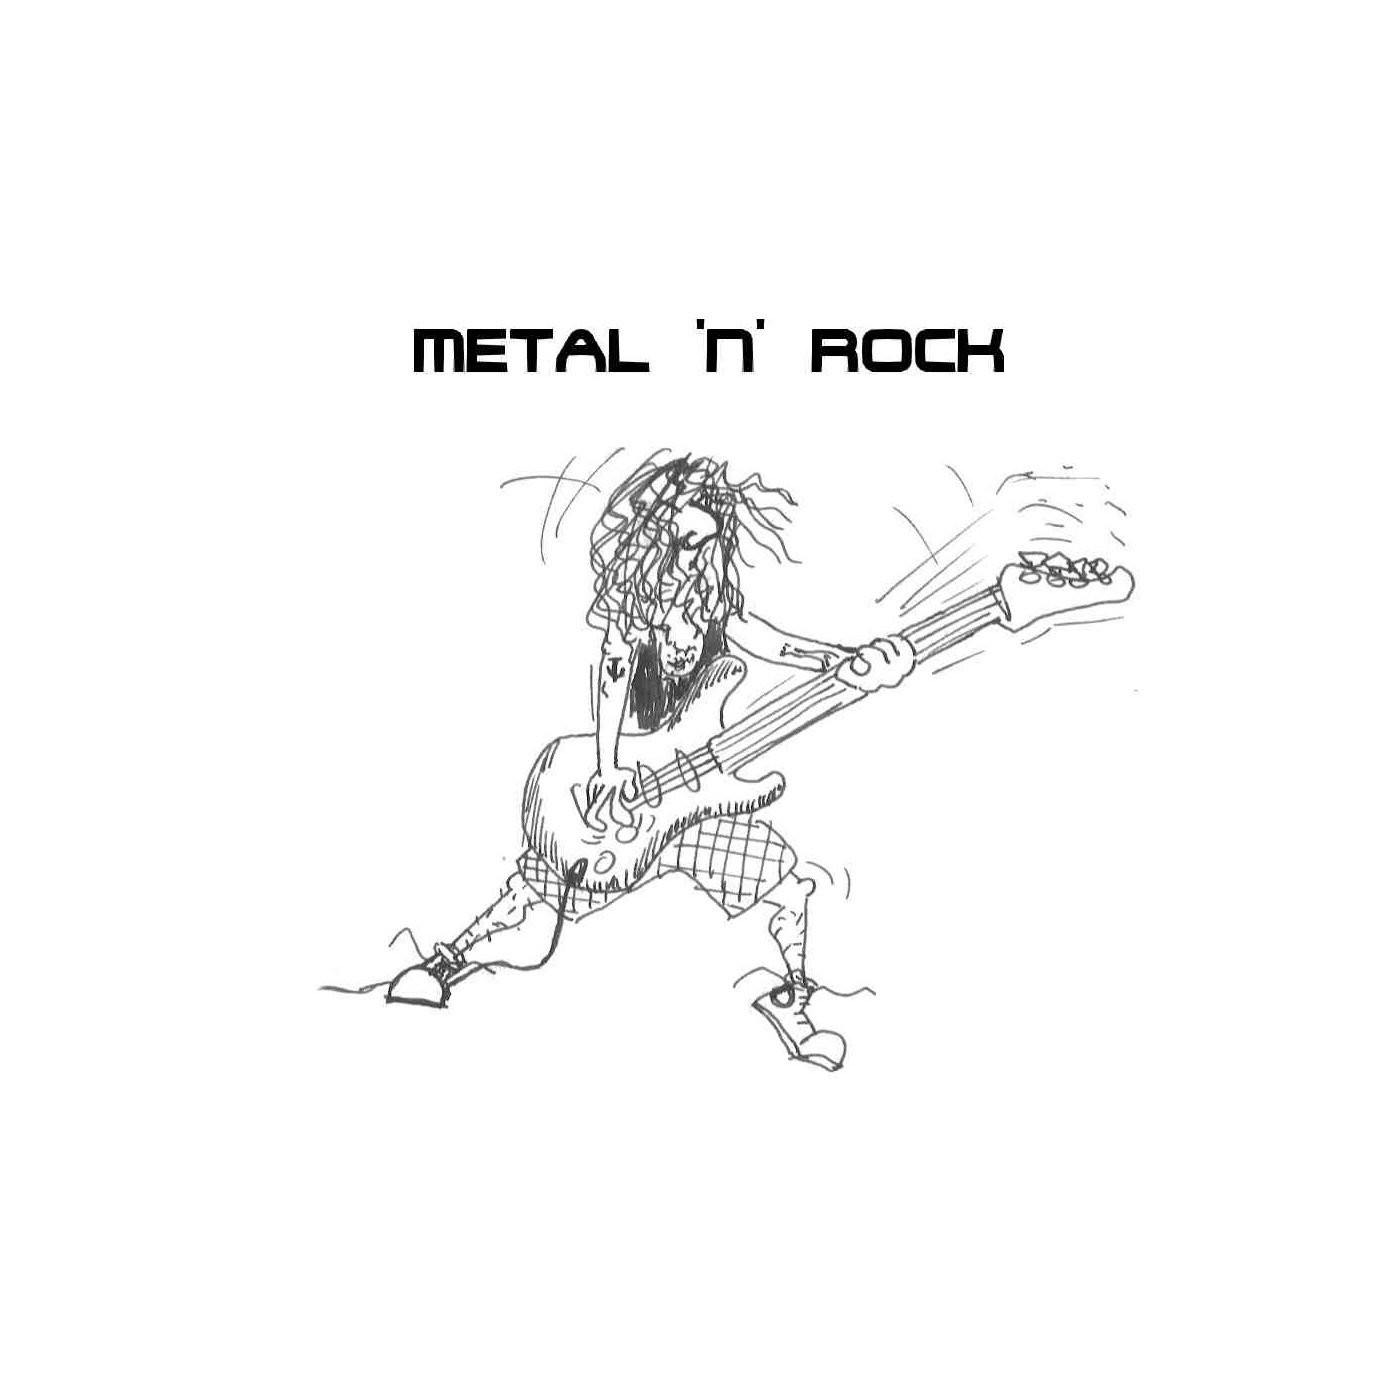 Programas Mensuales Metal N’ Rock